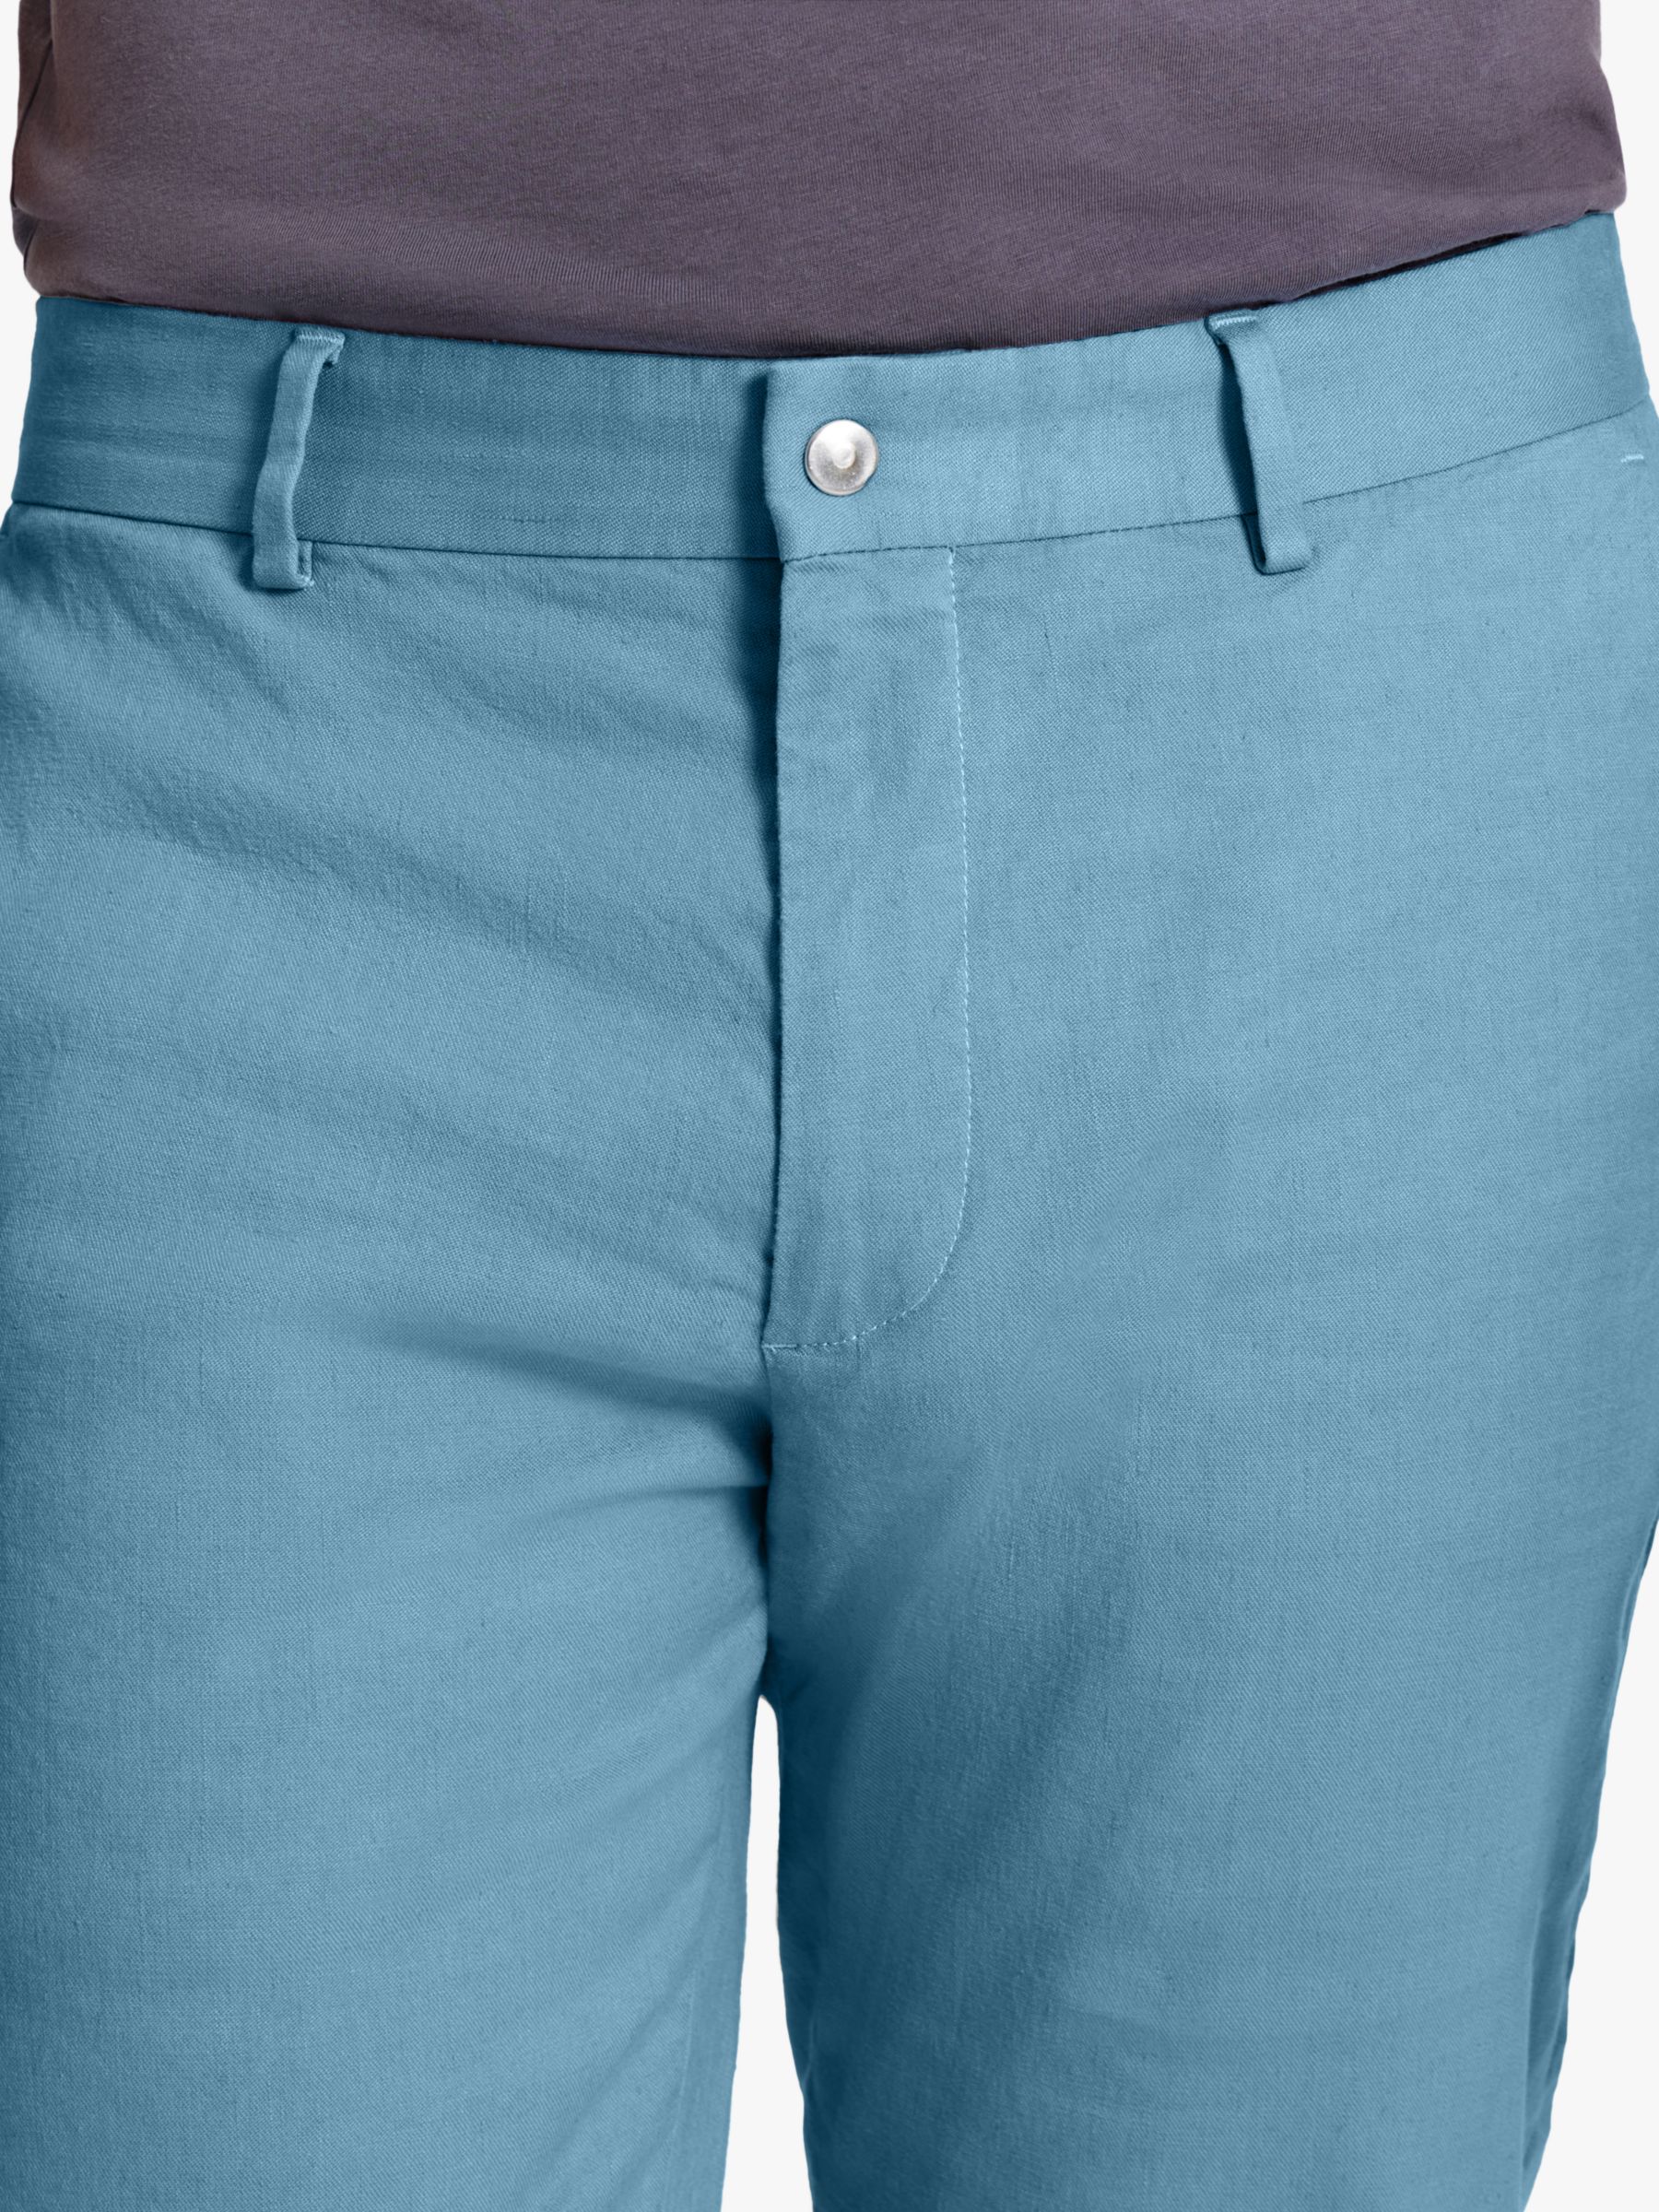 SPOKE Linen Sharps Regular Thigh Trousers, Aegean, W34/L33